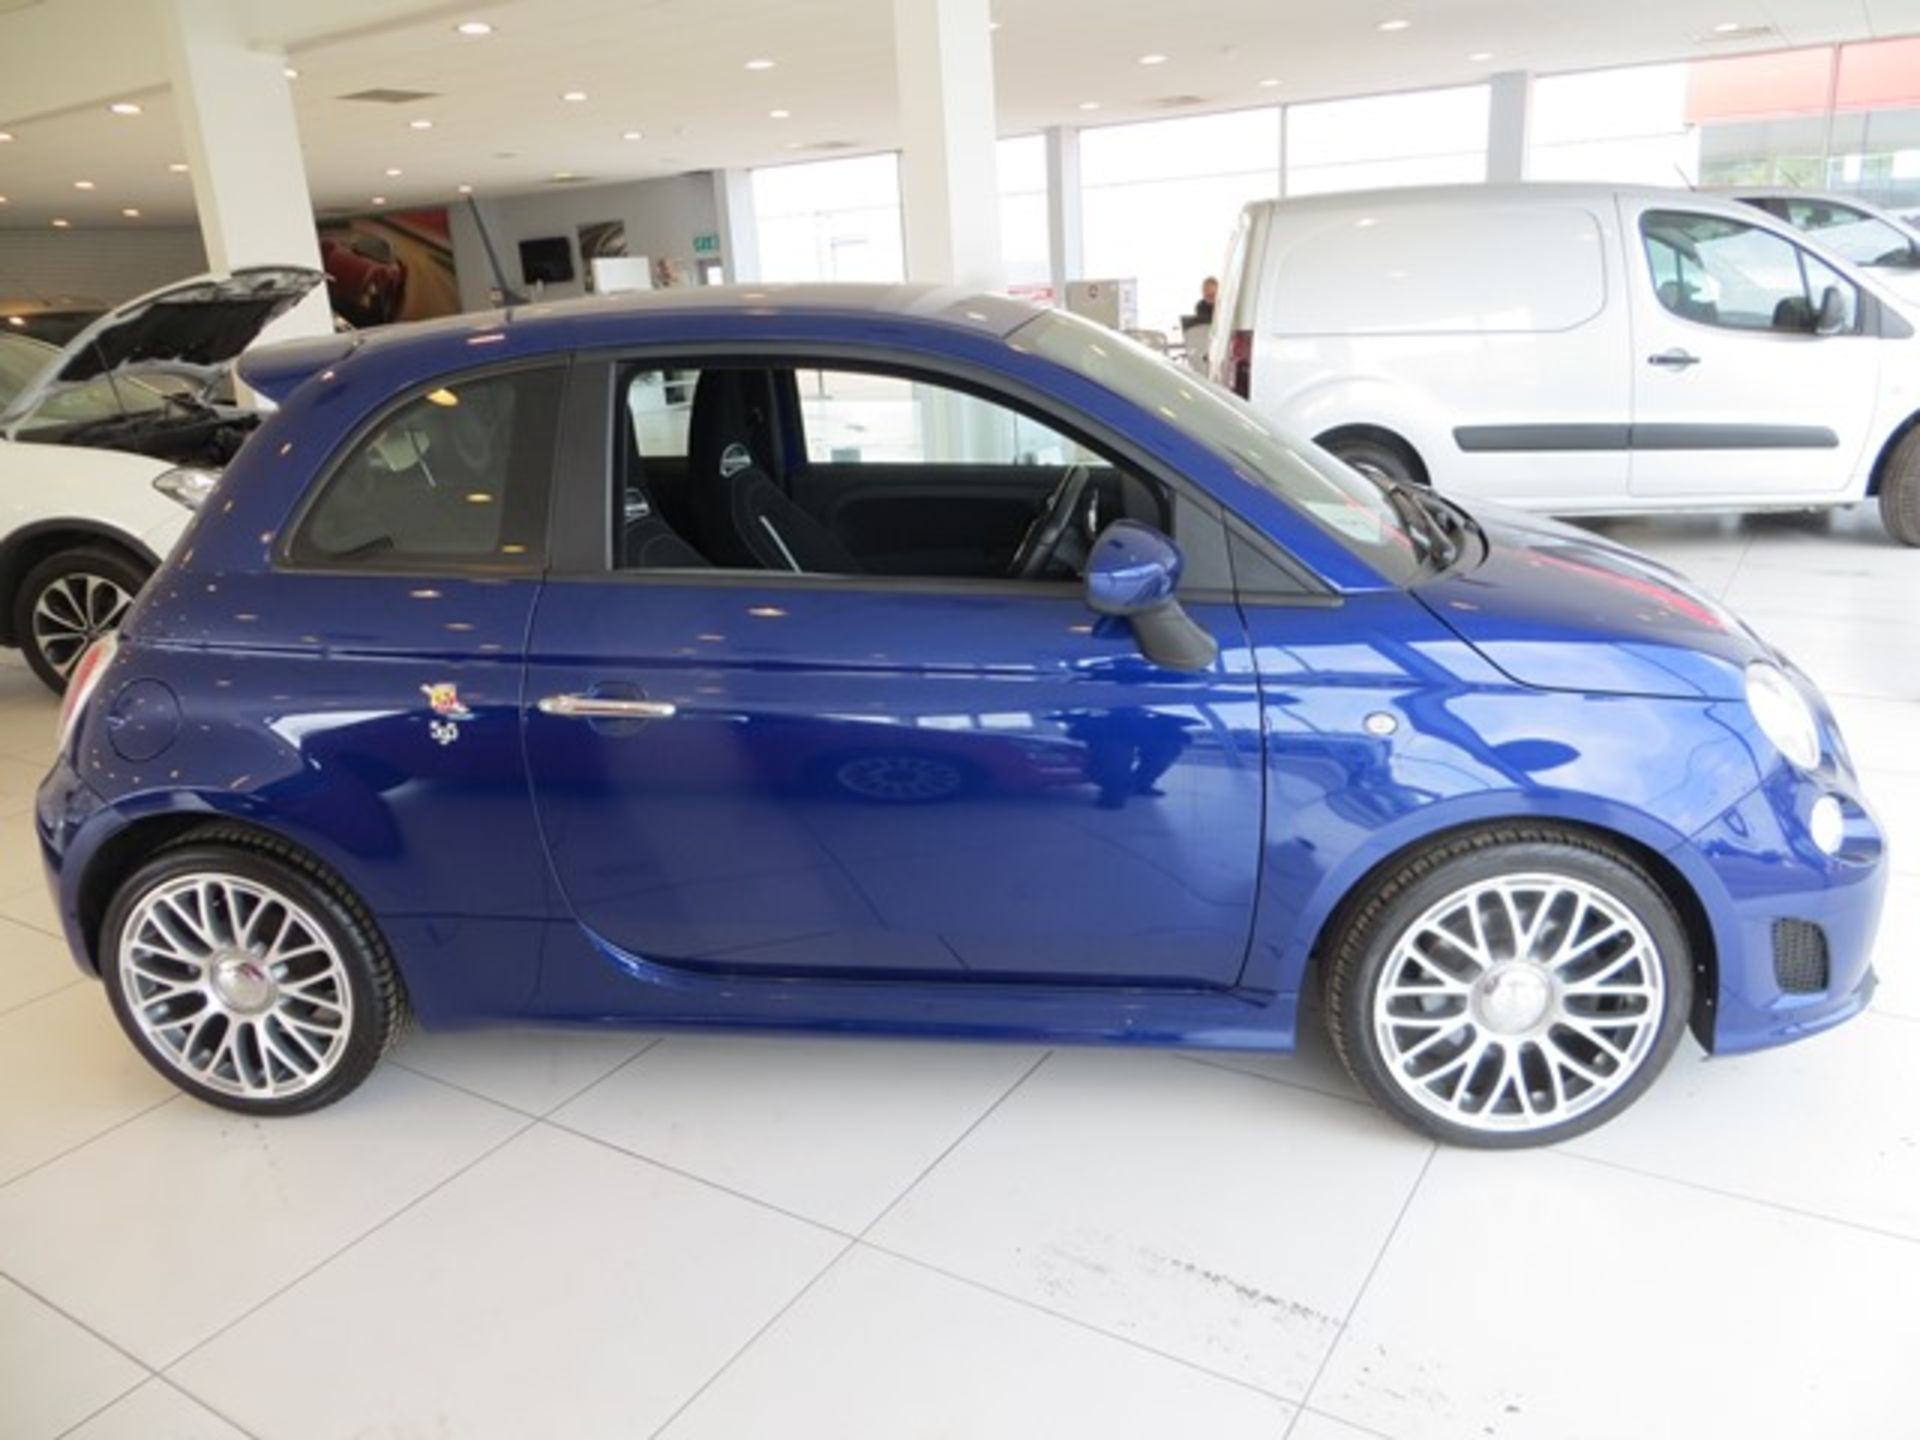 Fiat Abarth 595 1.4 T jet metallic blue Auto petrol 3 door hatchback, Alloy wheels,front fogs, air - Image 2 of 8